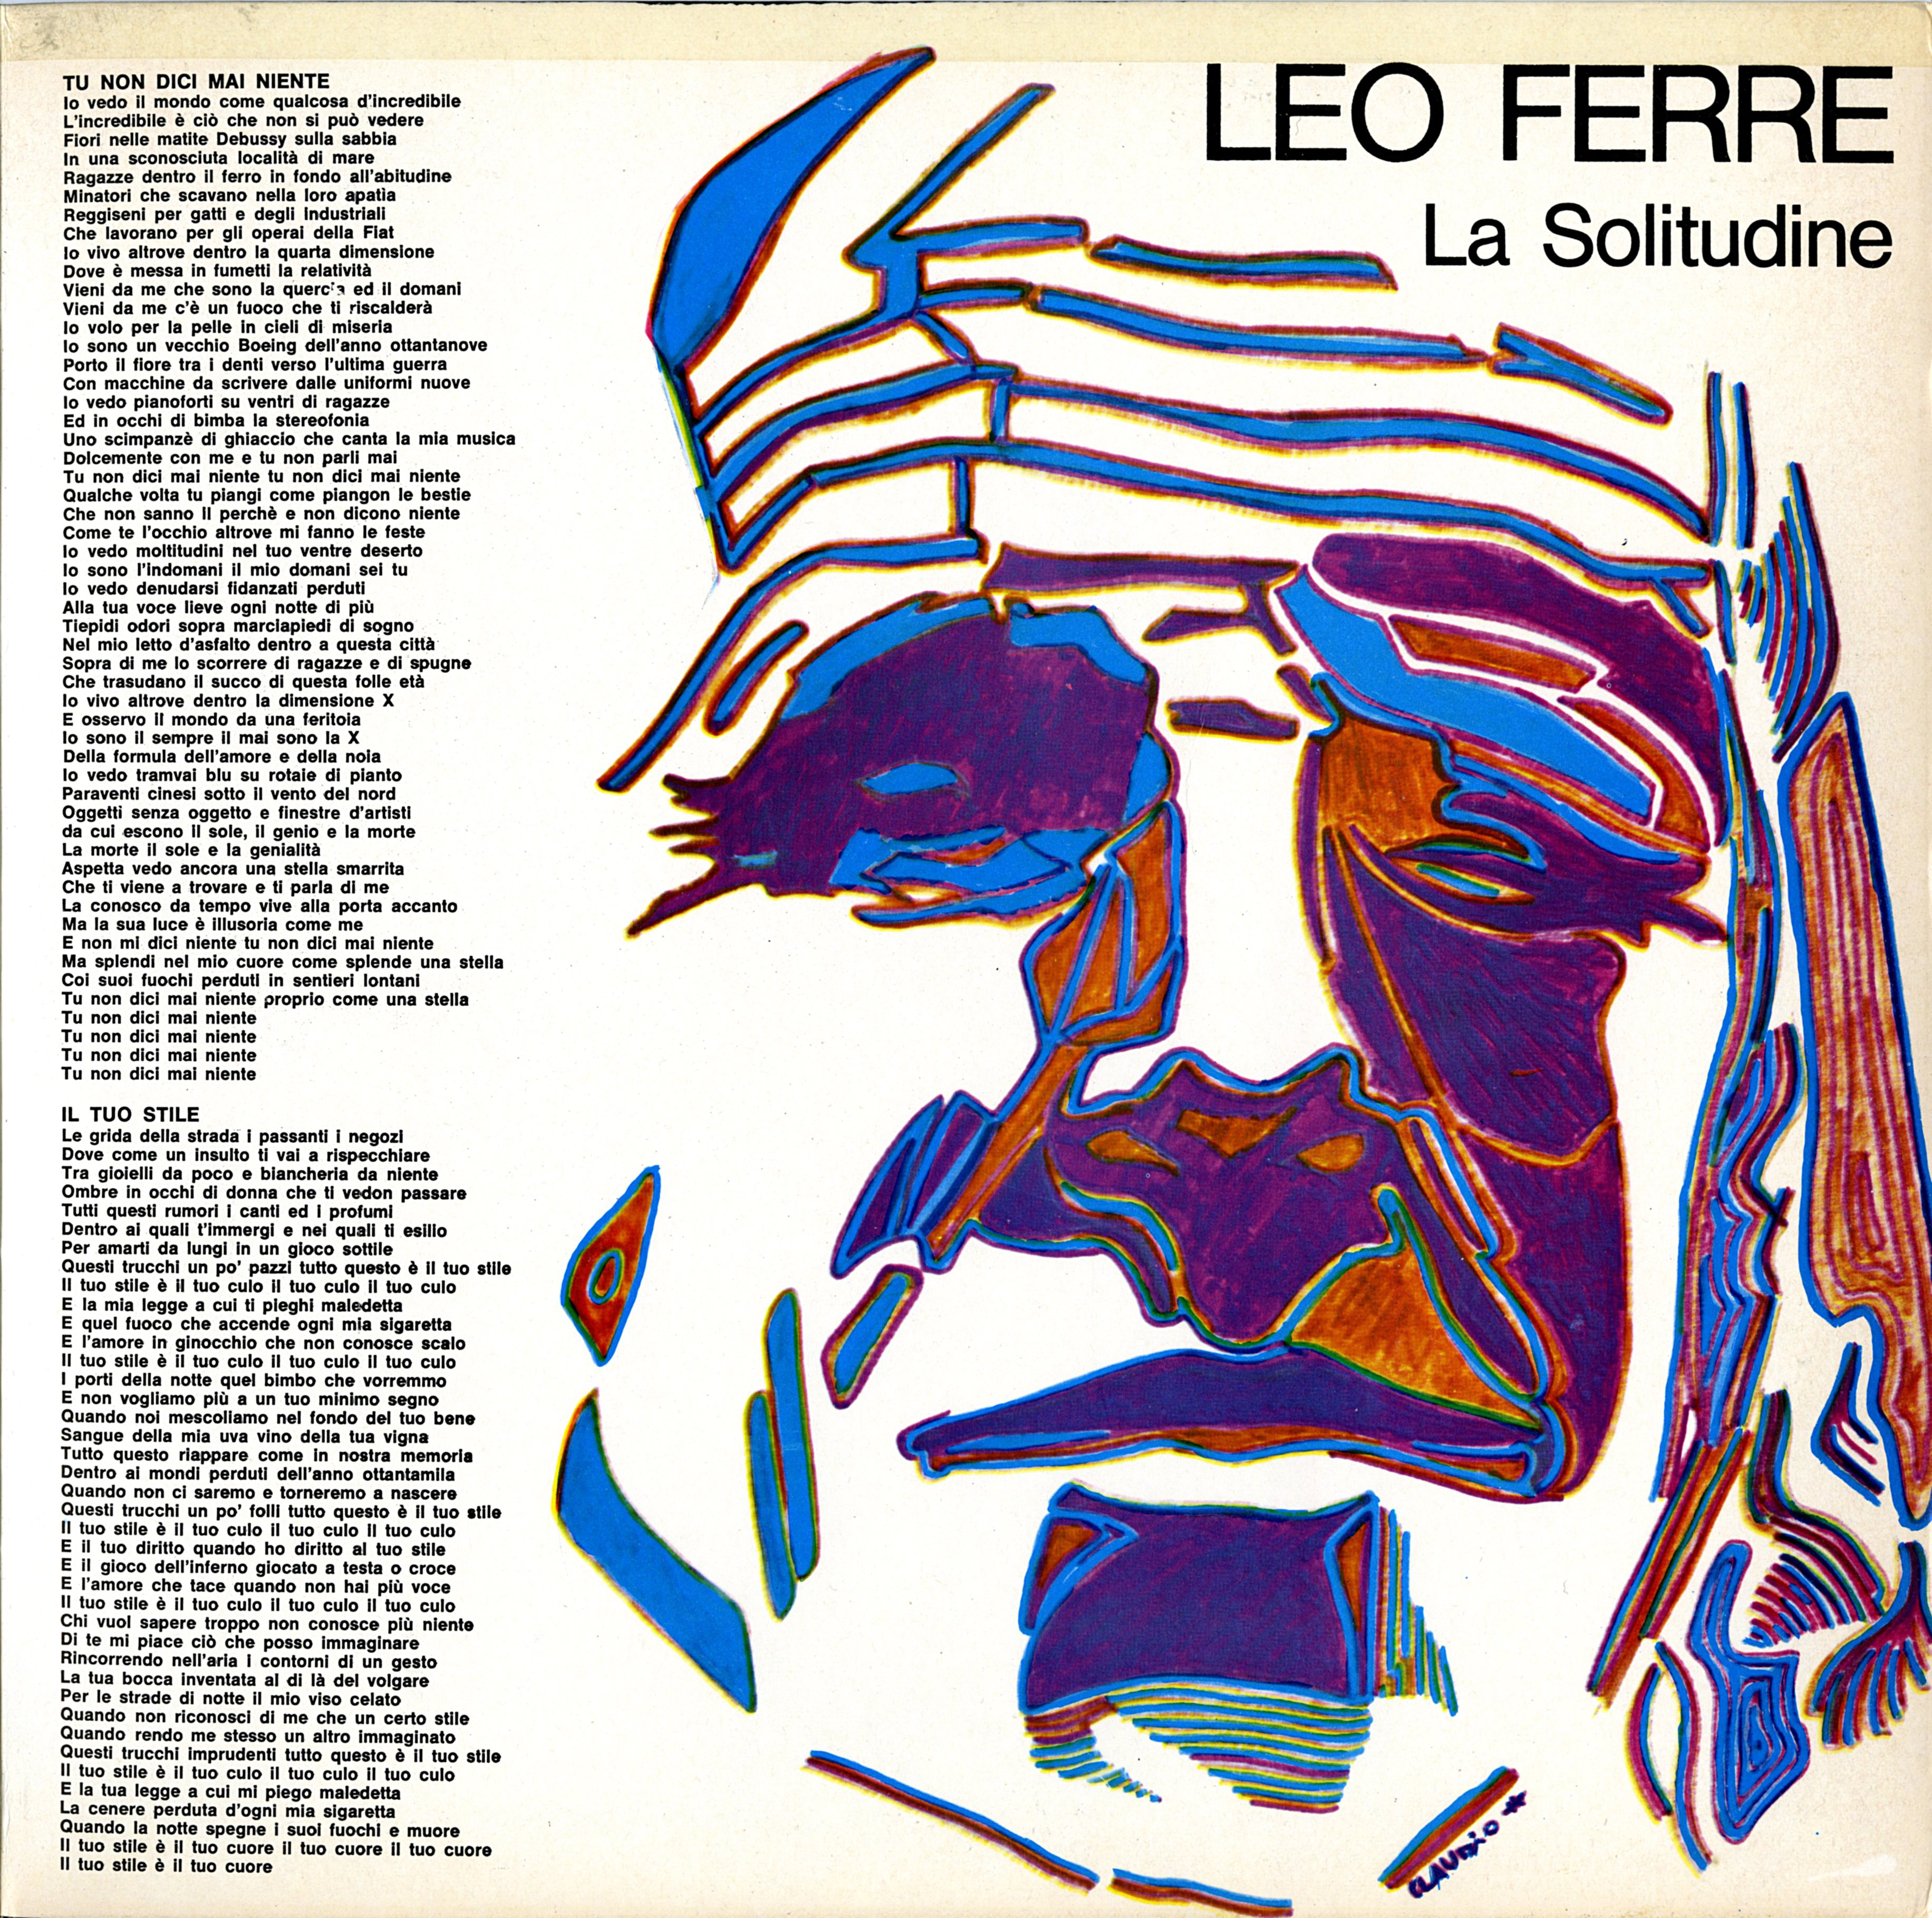 Léo Ferré - La solitudine, Barclay 60 028